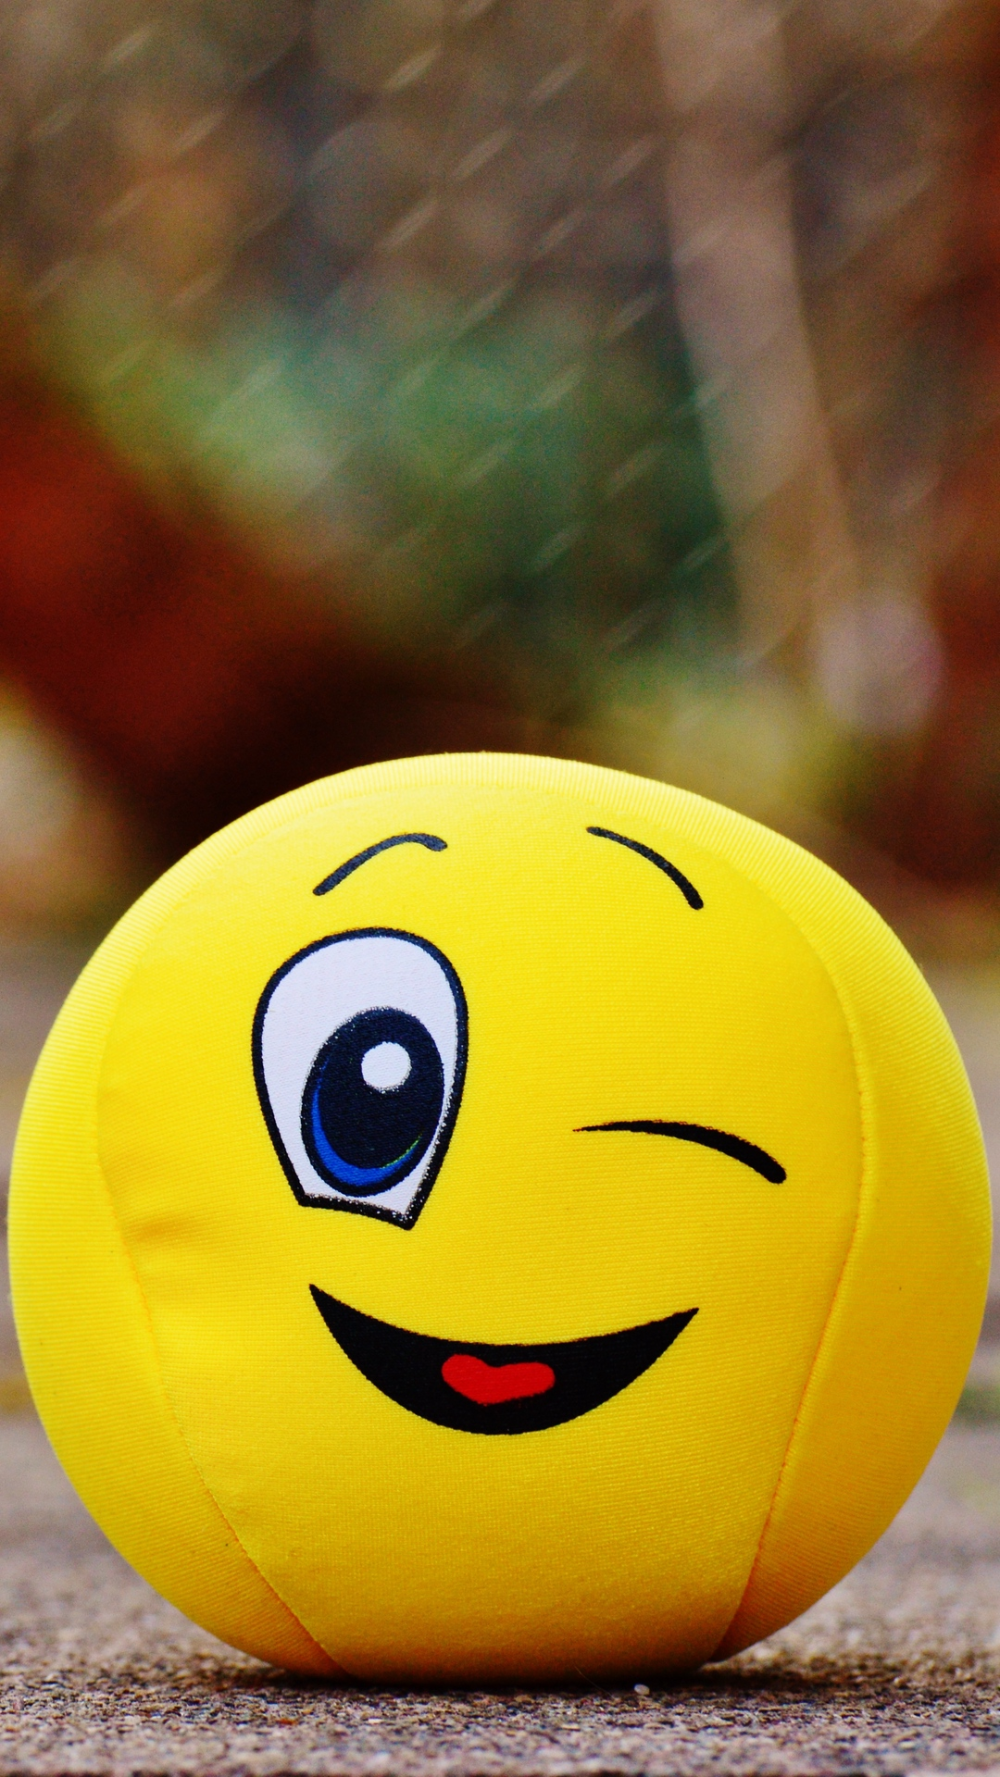 Free download ball smile happy toy Smile wallpaper Whatsapp ...